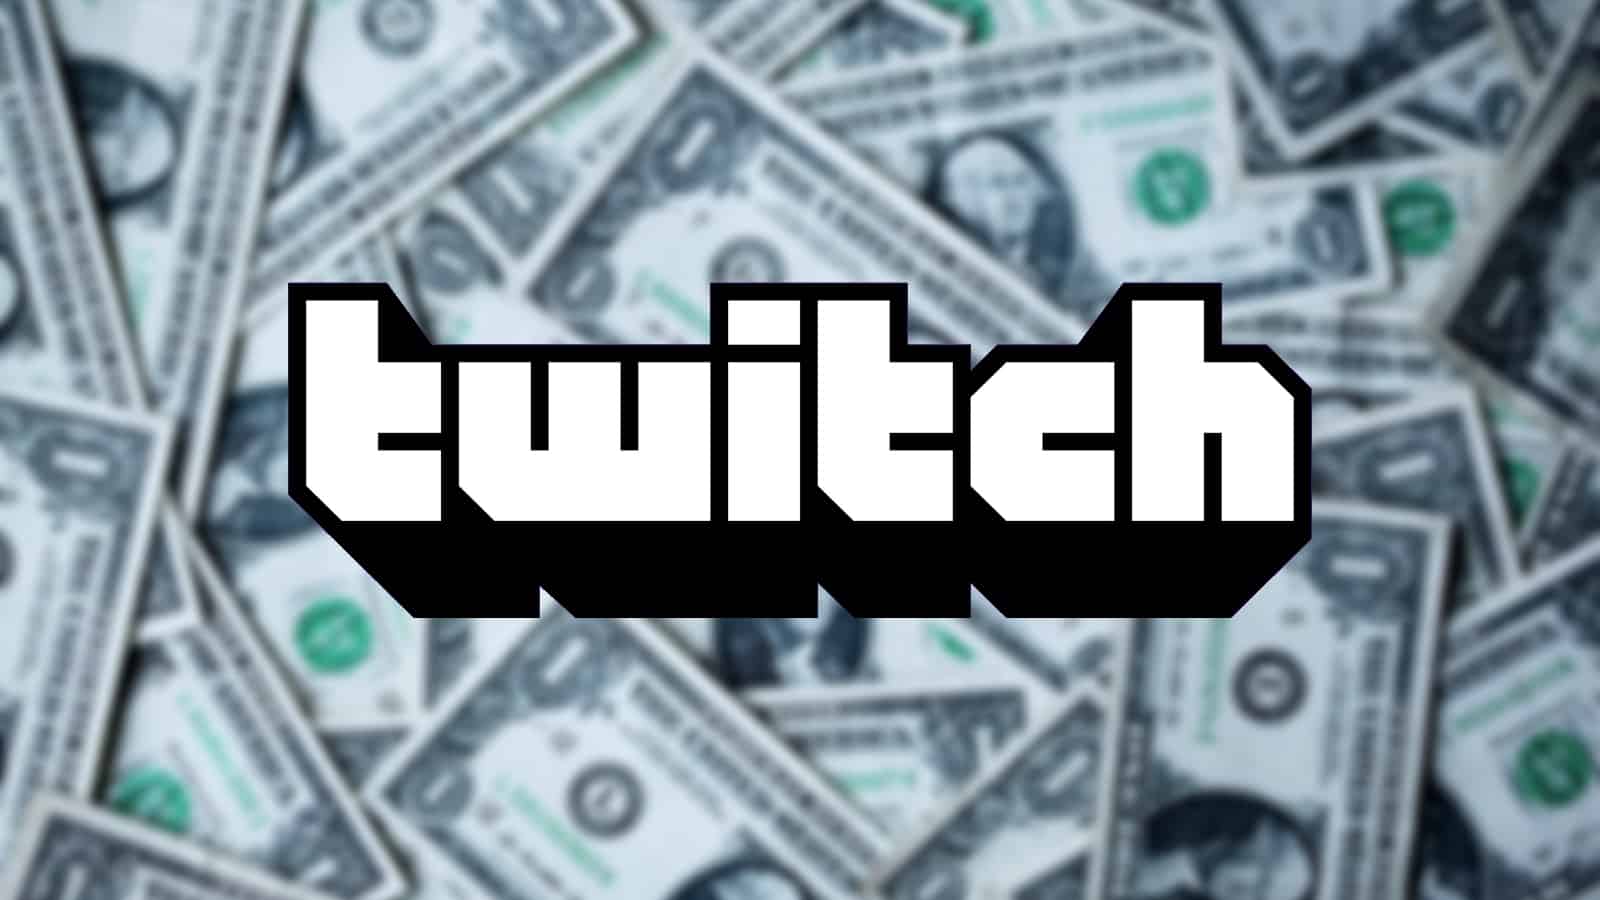 twitch logo on money in background